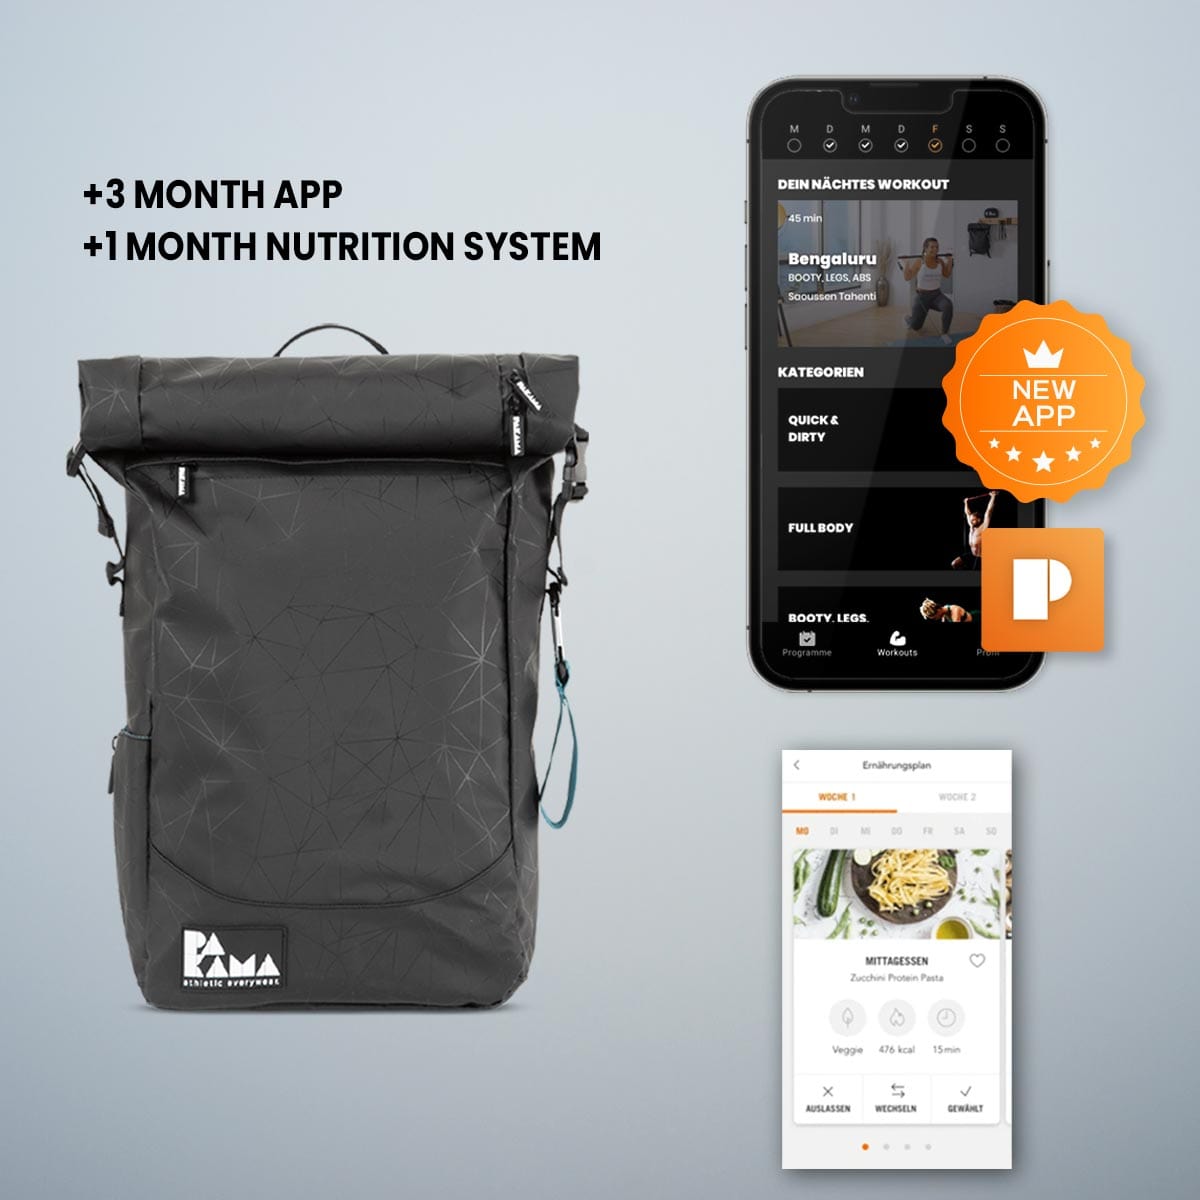 PAKAMA-fitnessrucksack-schwarz-app-nutrition system